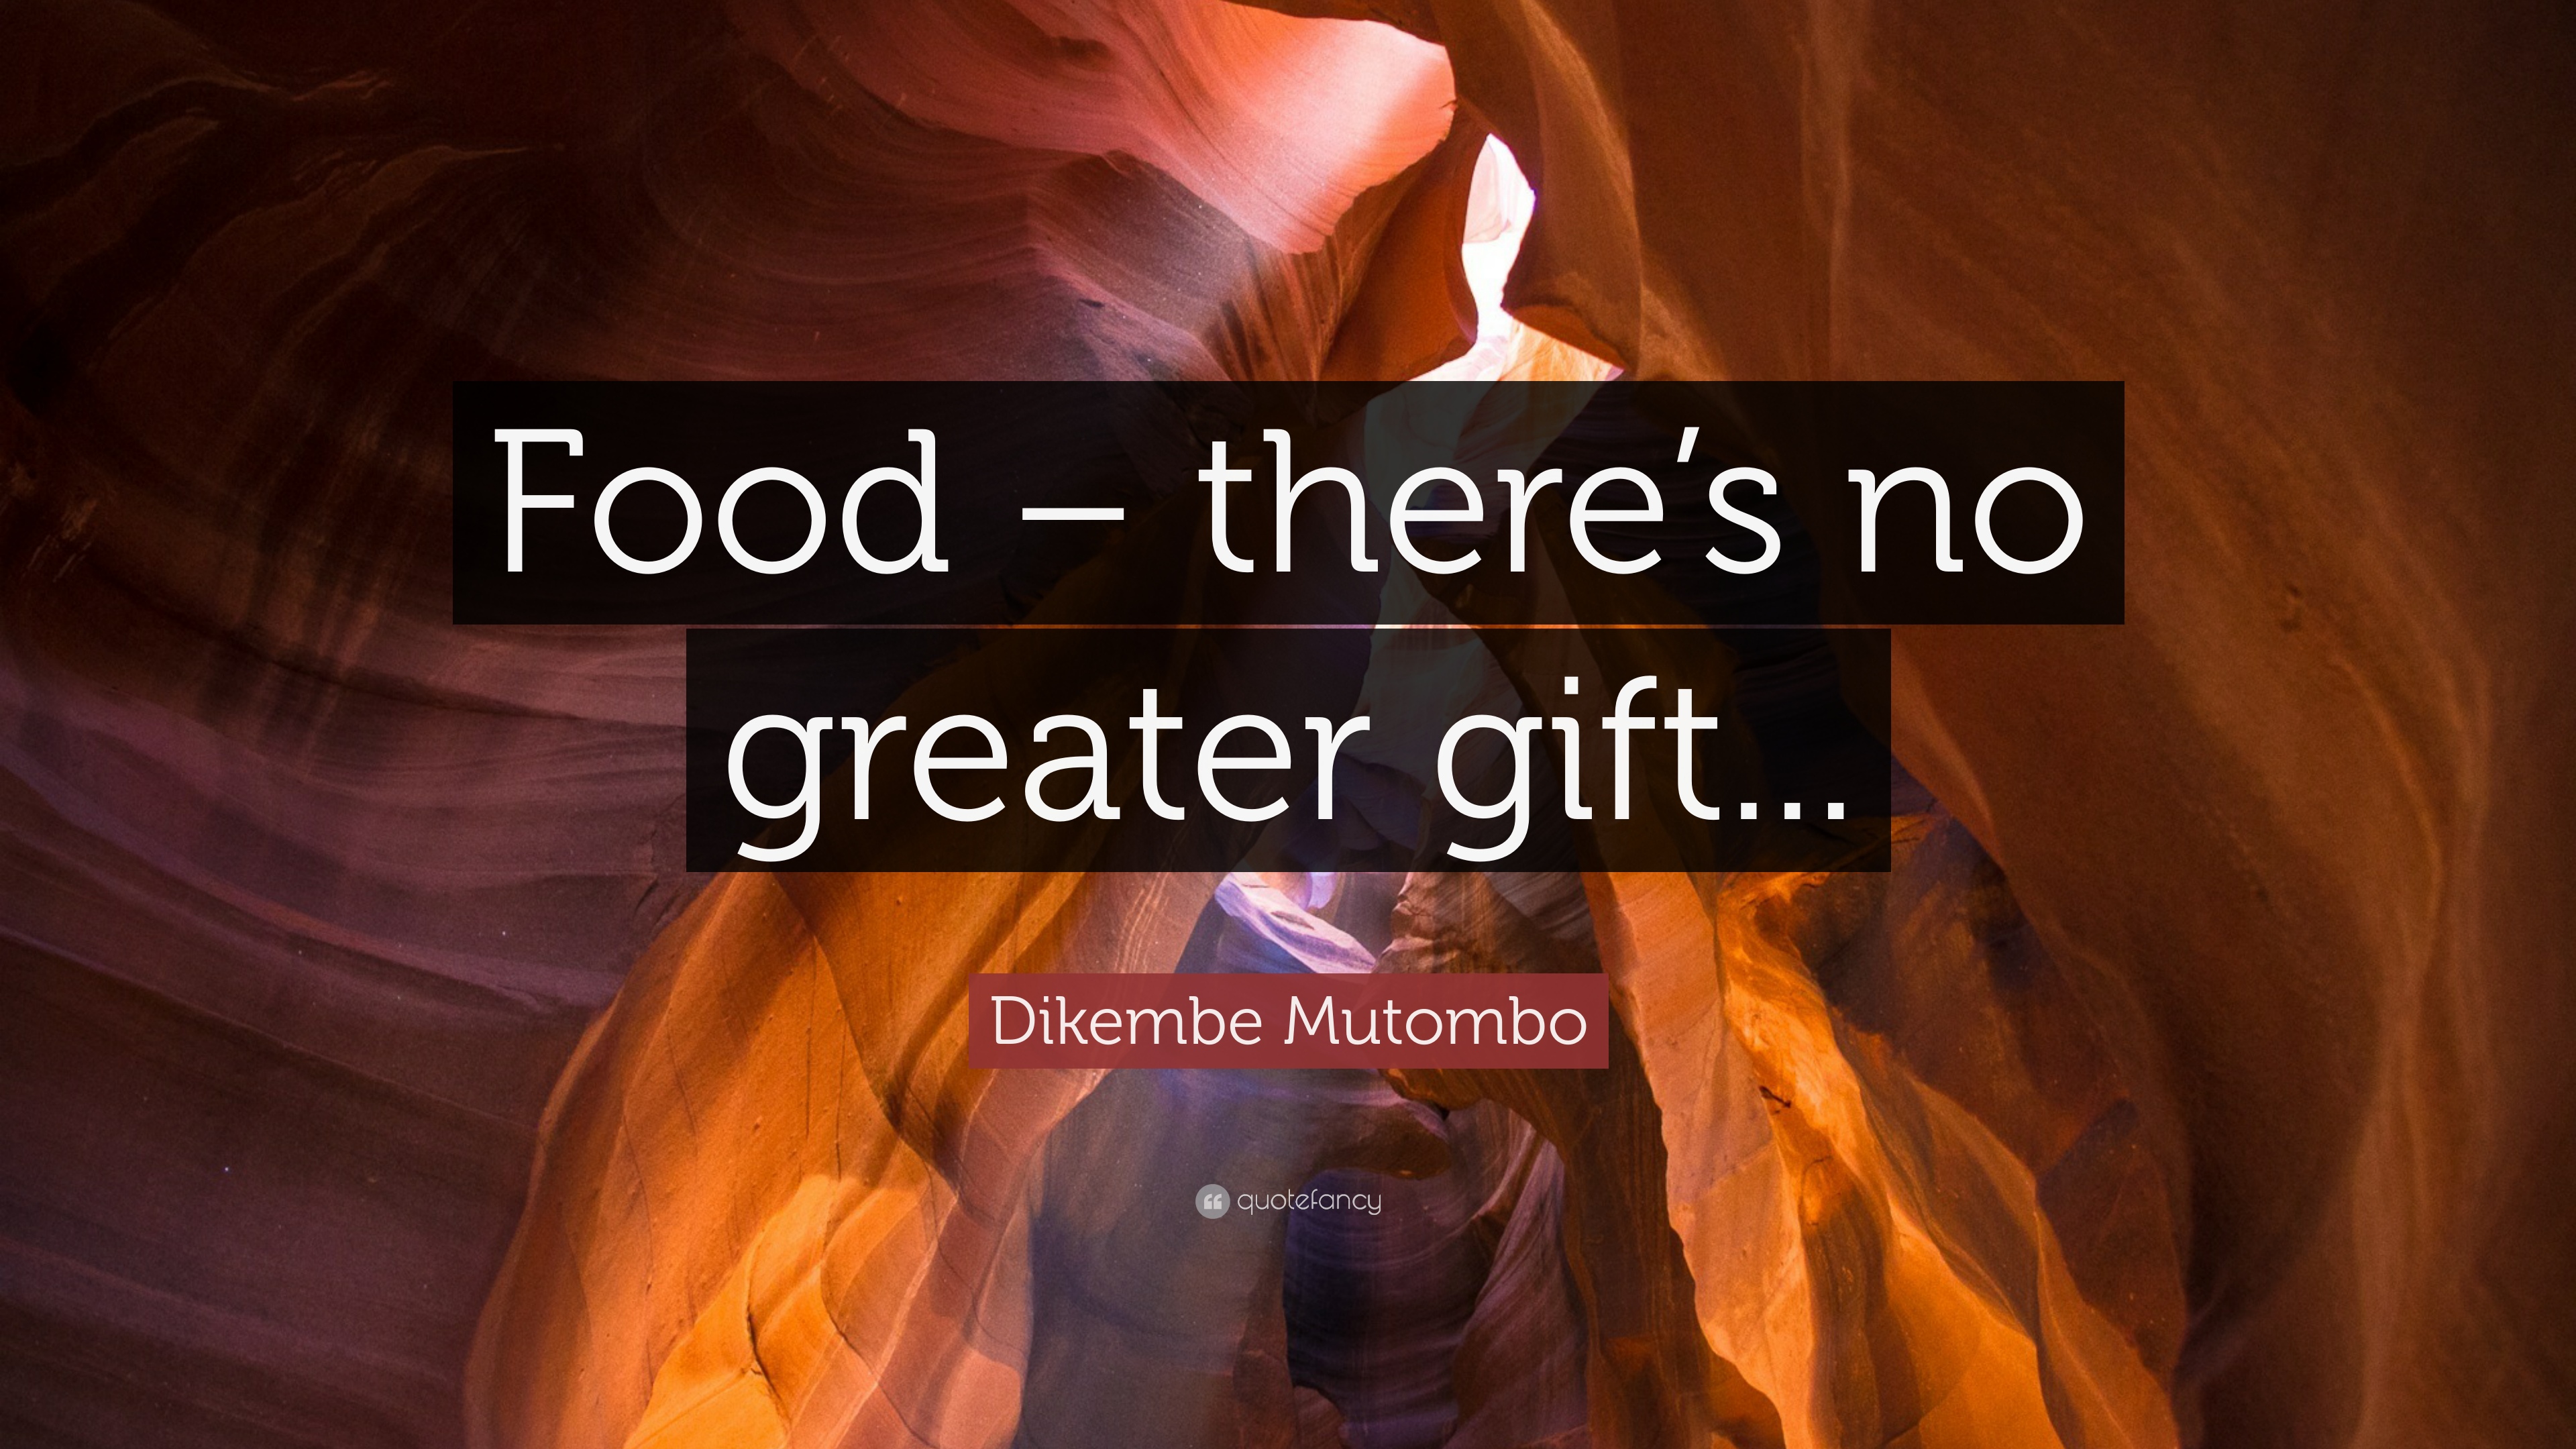 Dikembe Mutombo Quote: “Food